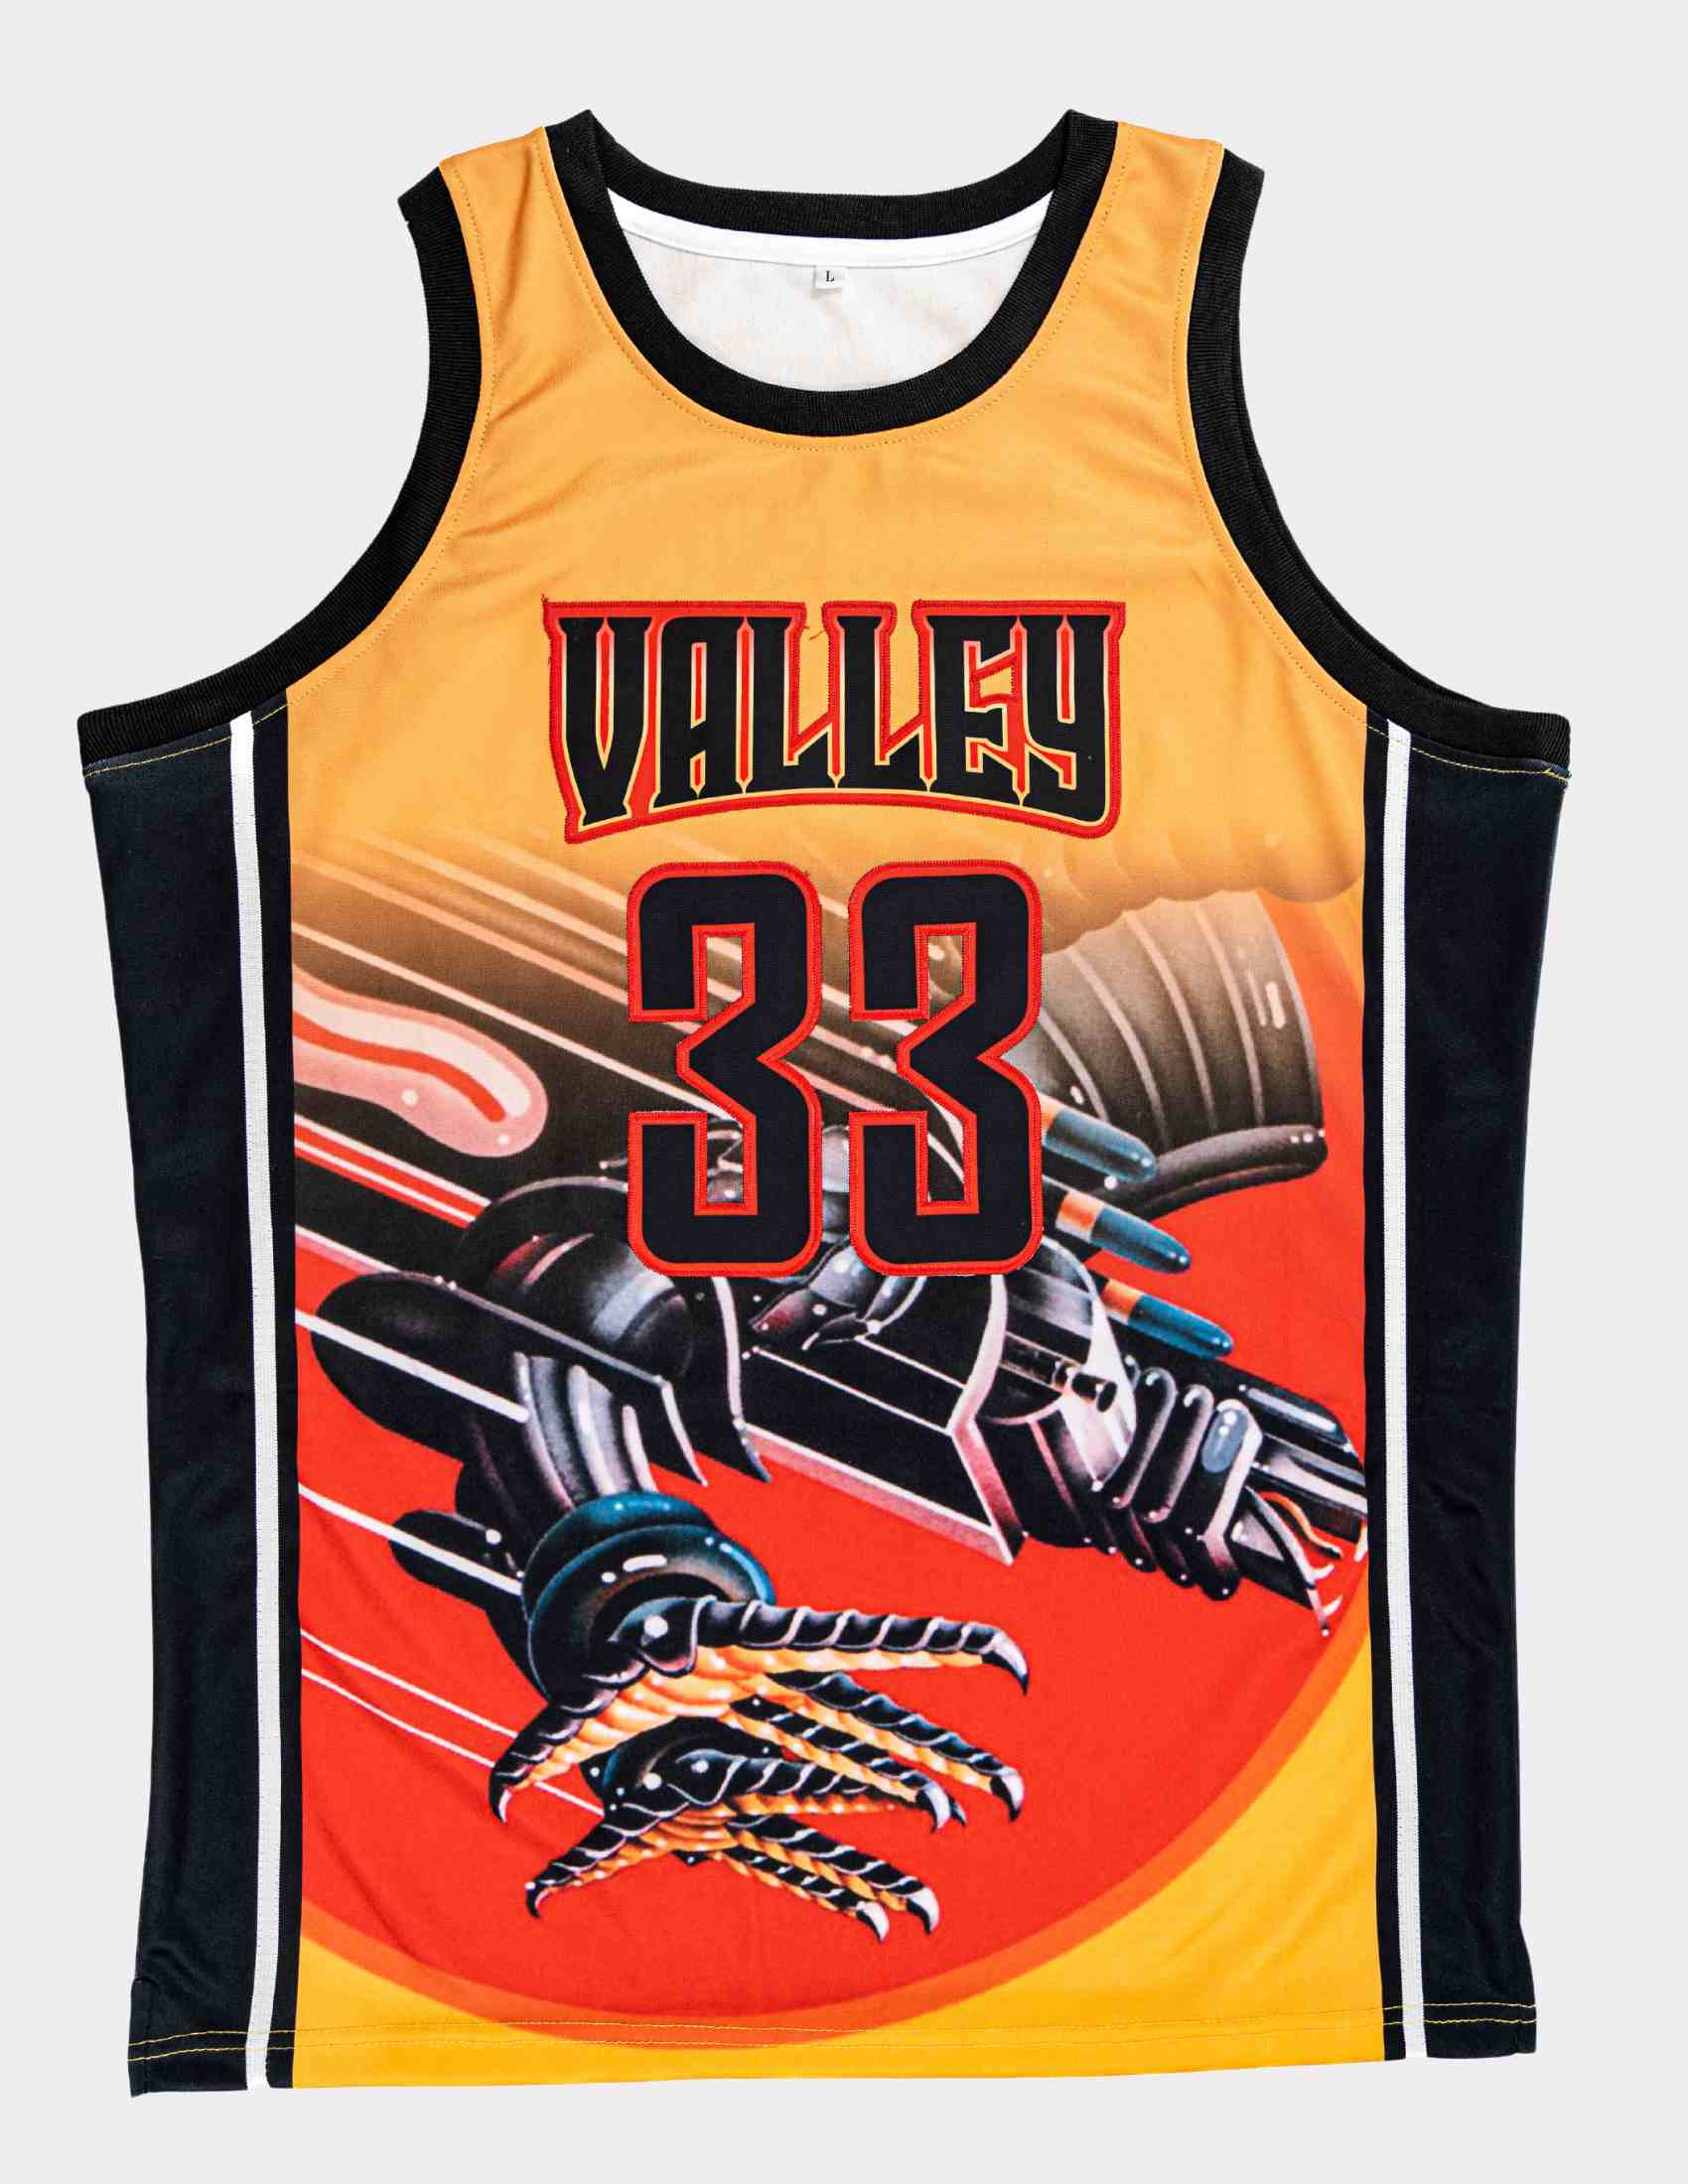 AllStarHigh Larry Bird High School Basketball Jersey - Valley | Throwback Custom Retro Sports Fan Apparel Jersey